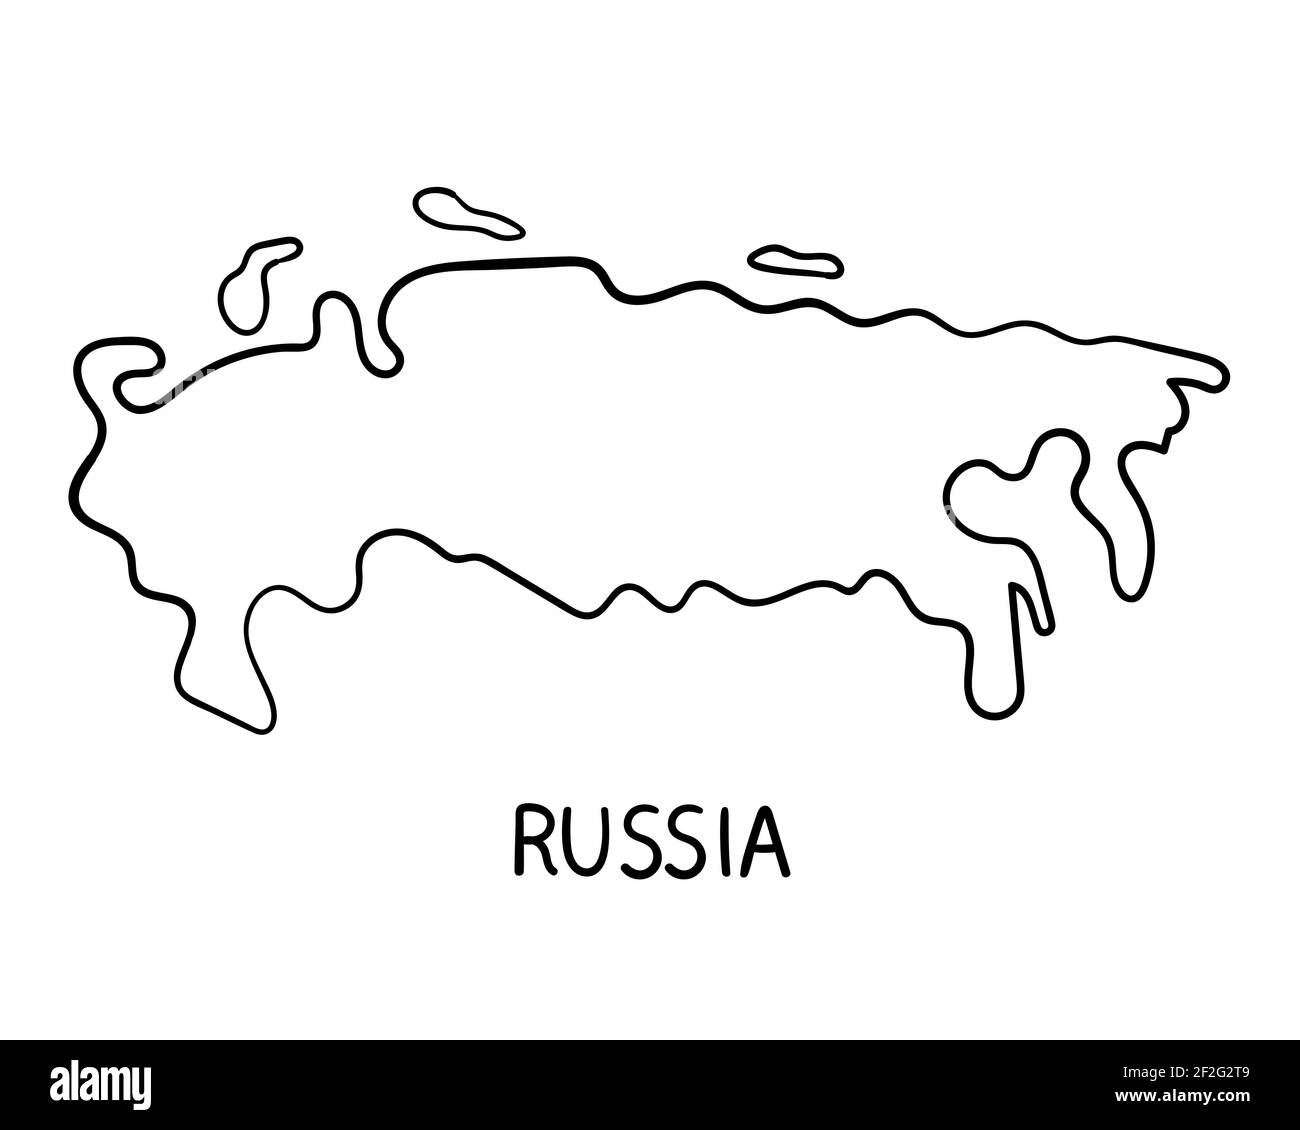 Russia Map - Hand Drawn Illustration Stock Photo